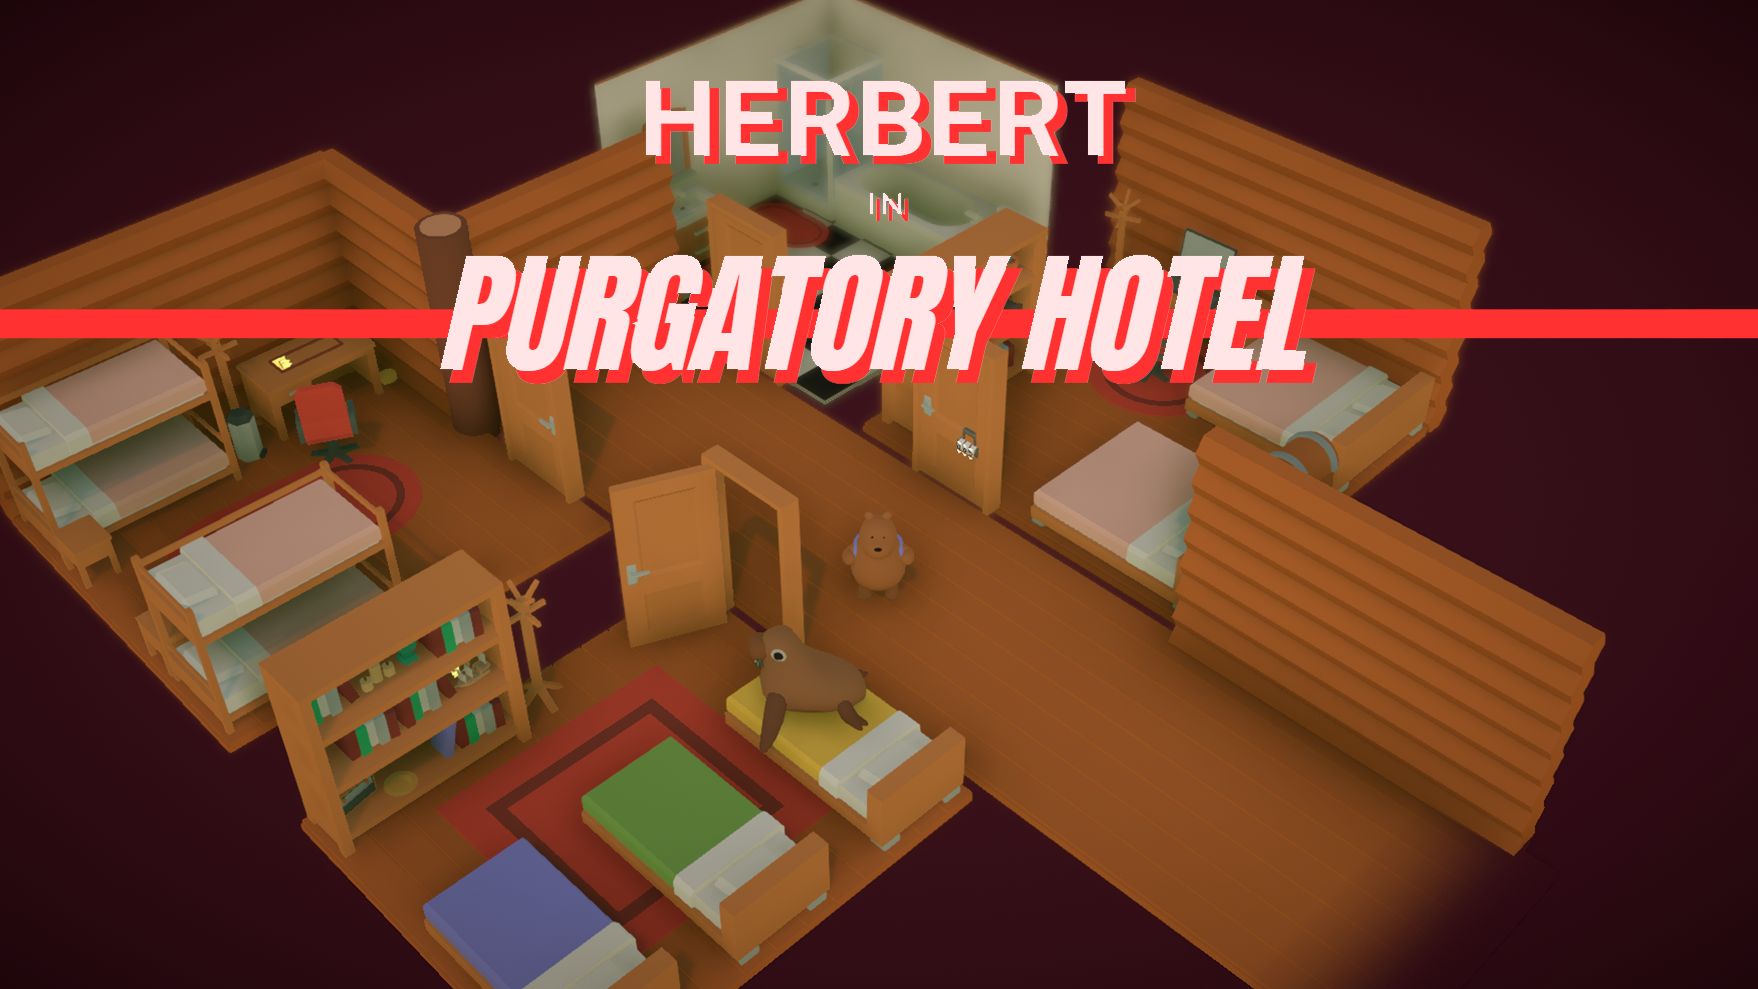 Herbert in Purgatory Hotel